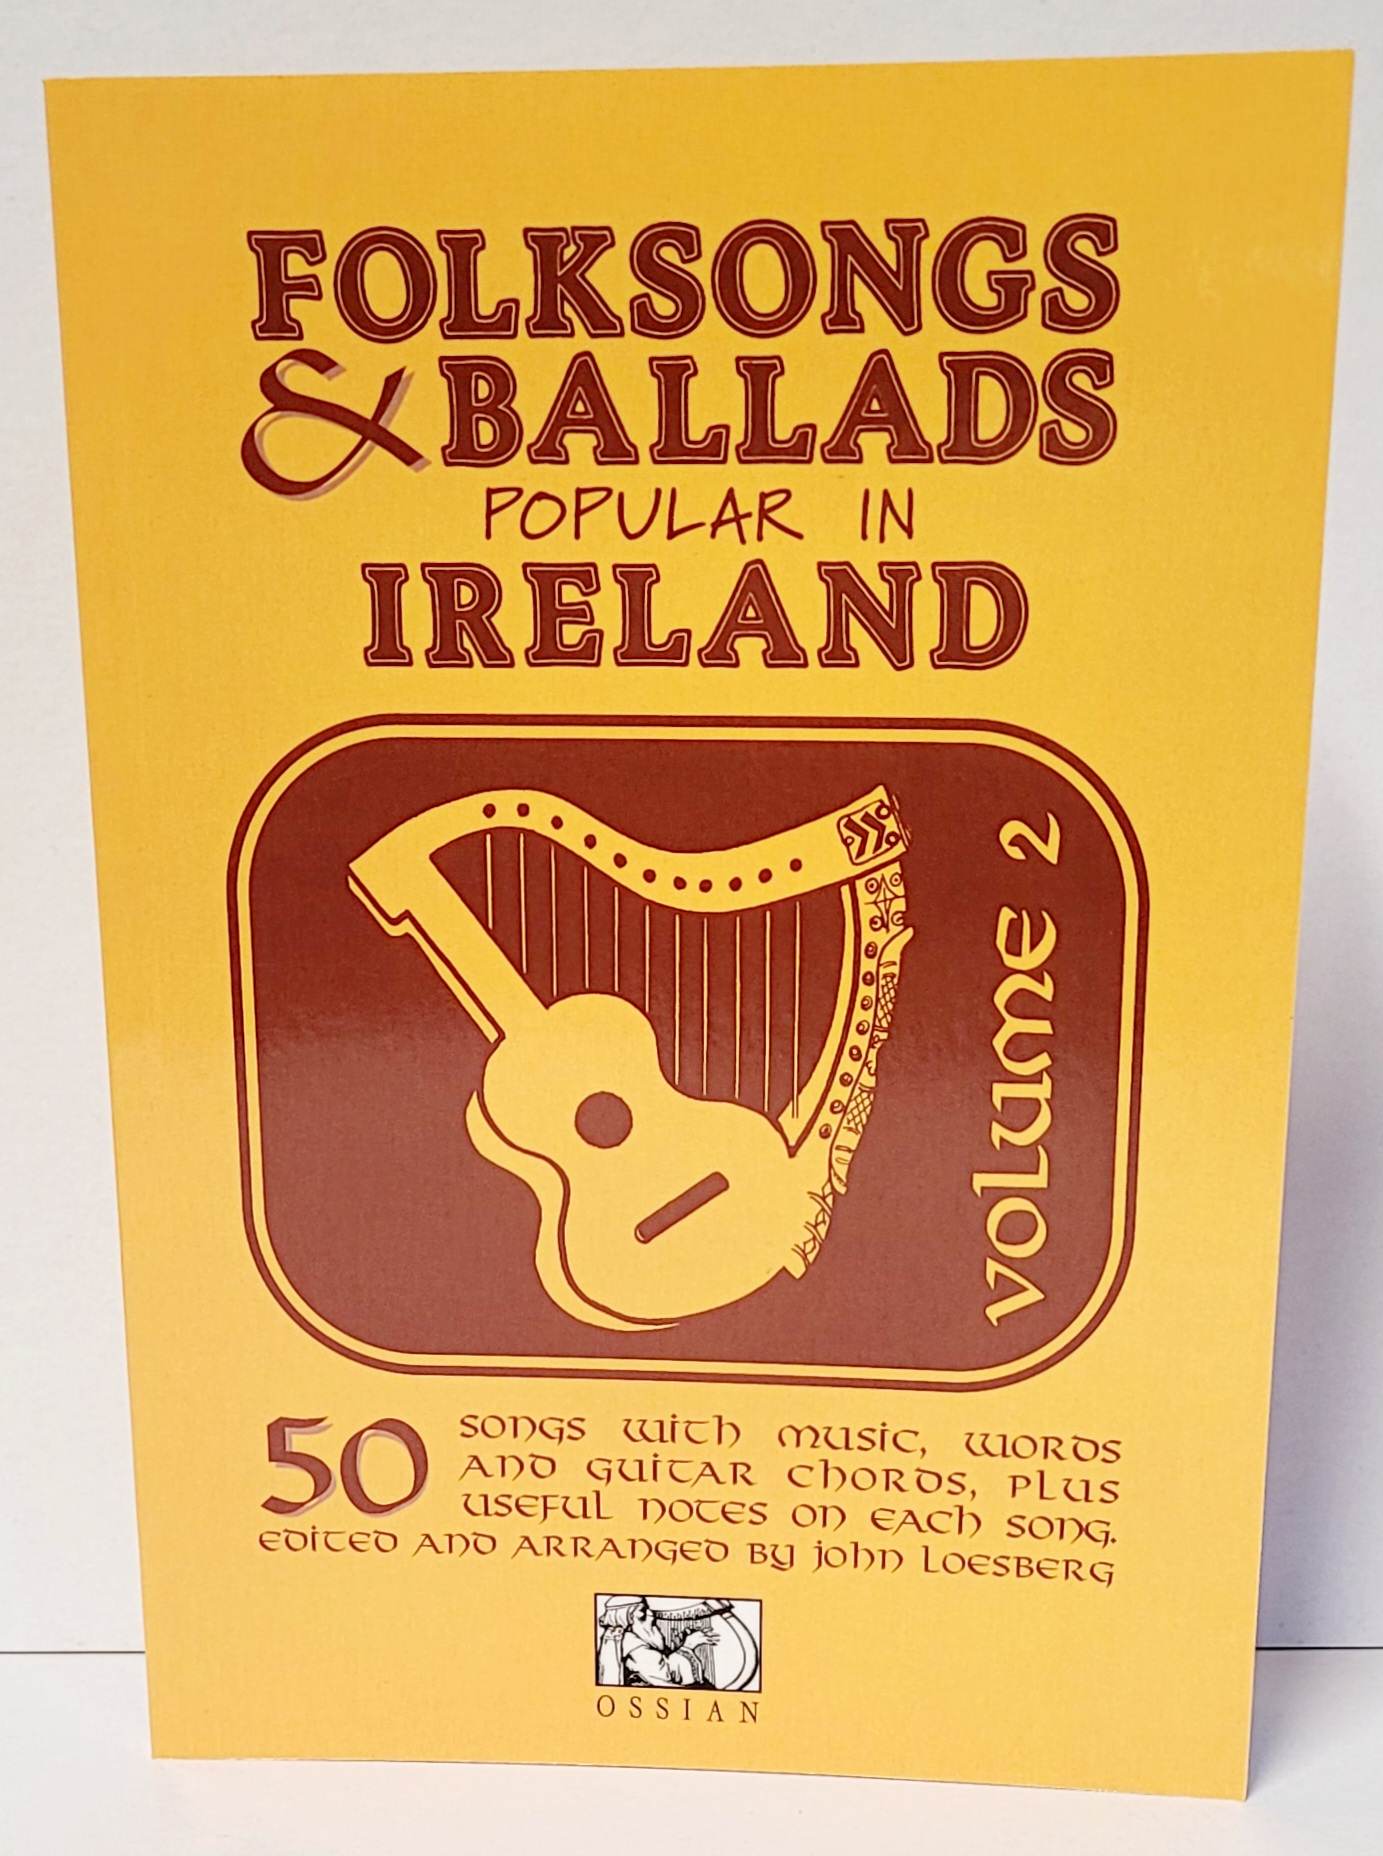 Folksongs & Ballads Popular in Ireland Volume 2 by John Loesberg